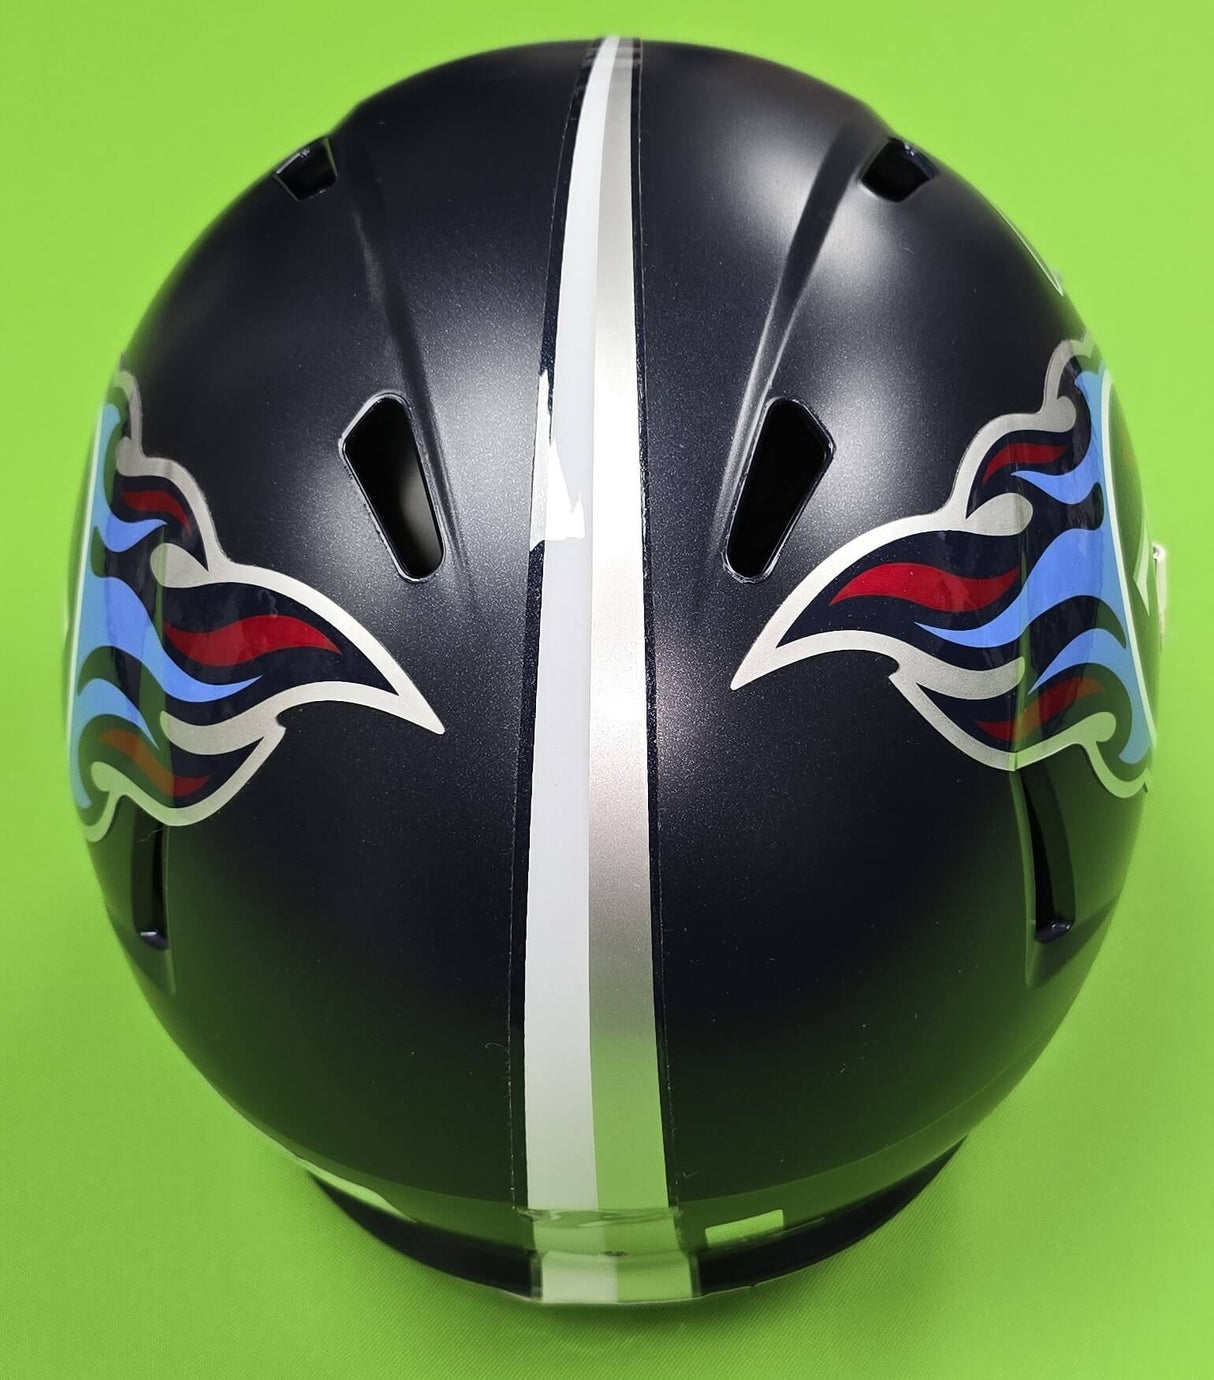 Ryan Tannehill Autographed Tennessee Titans Replica Eclipse Speed Full-Size Helmet (Beckett)